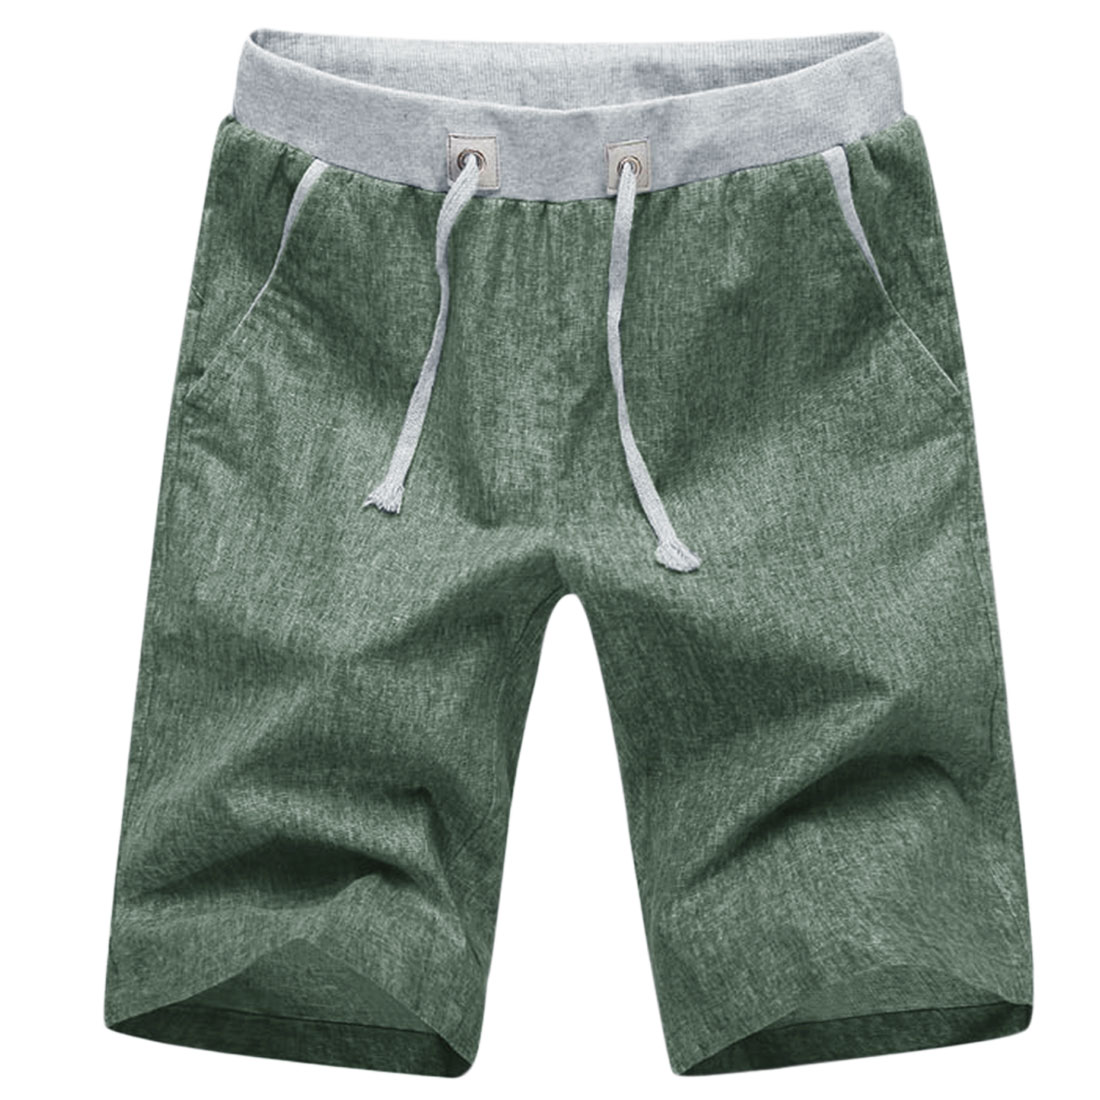 Men's Drawstring Waist Slant Pocket Sides Casual Shorts (Size S / W30)